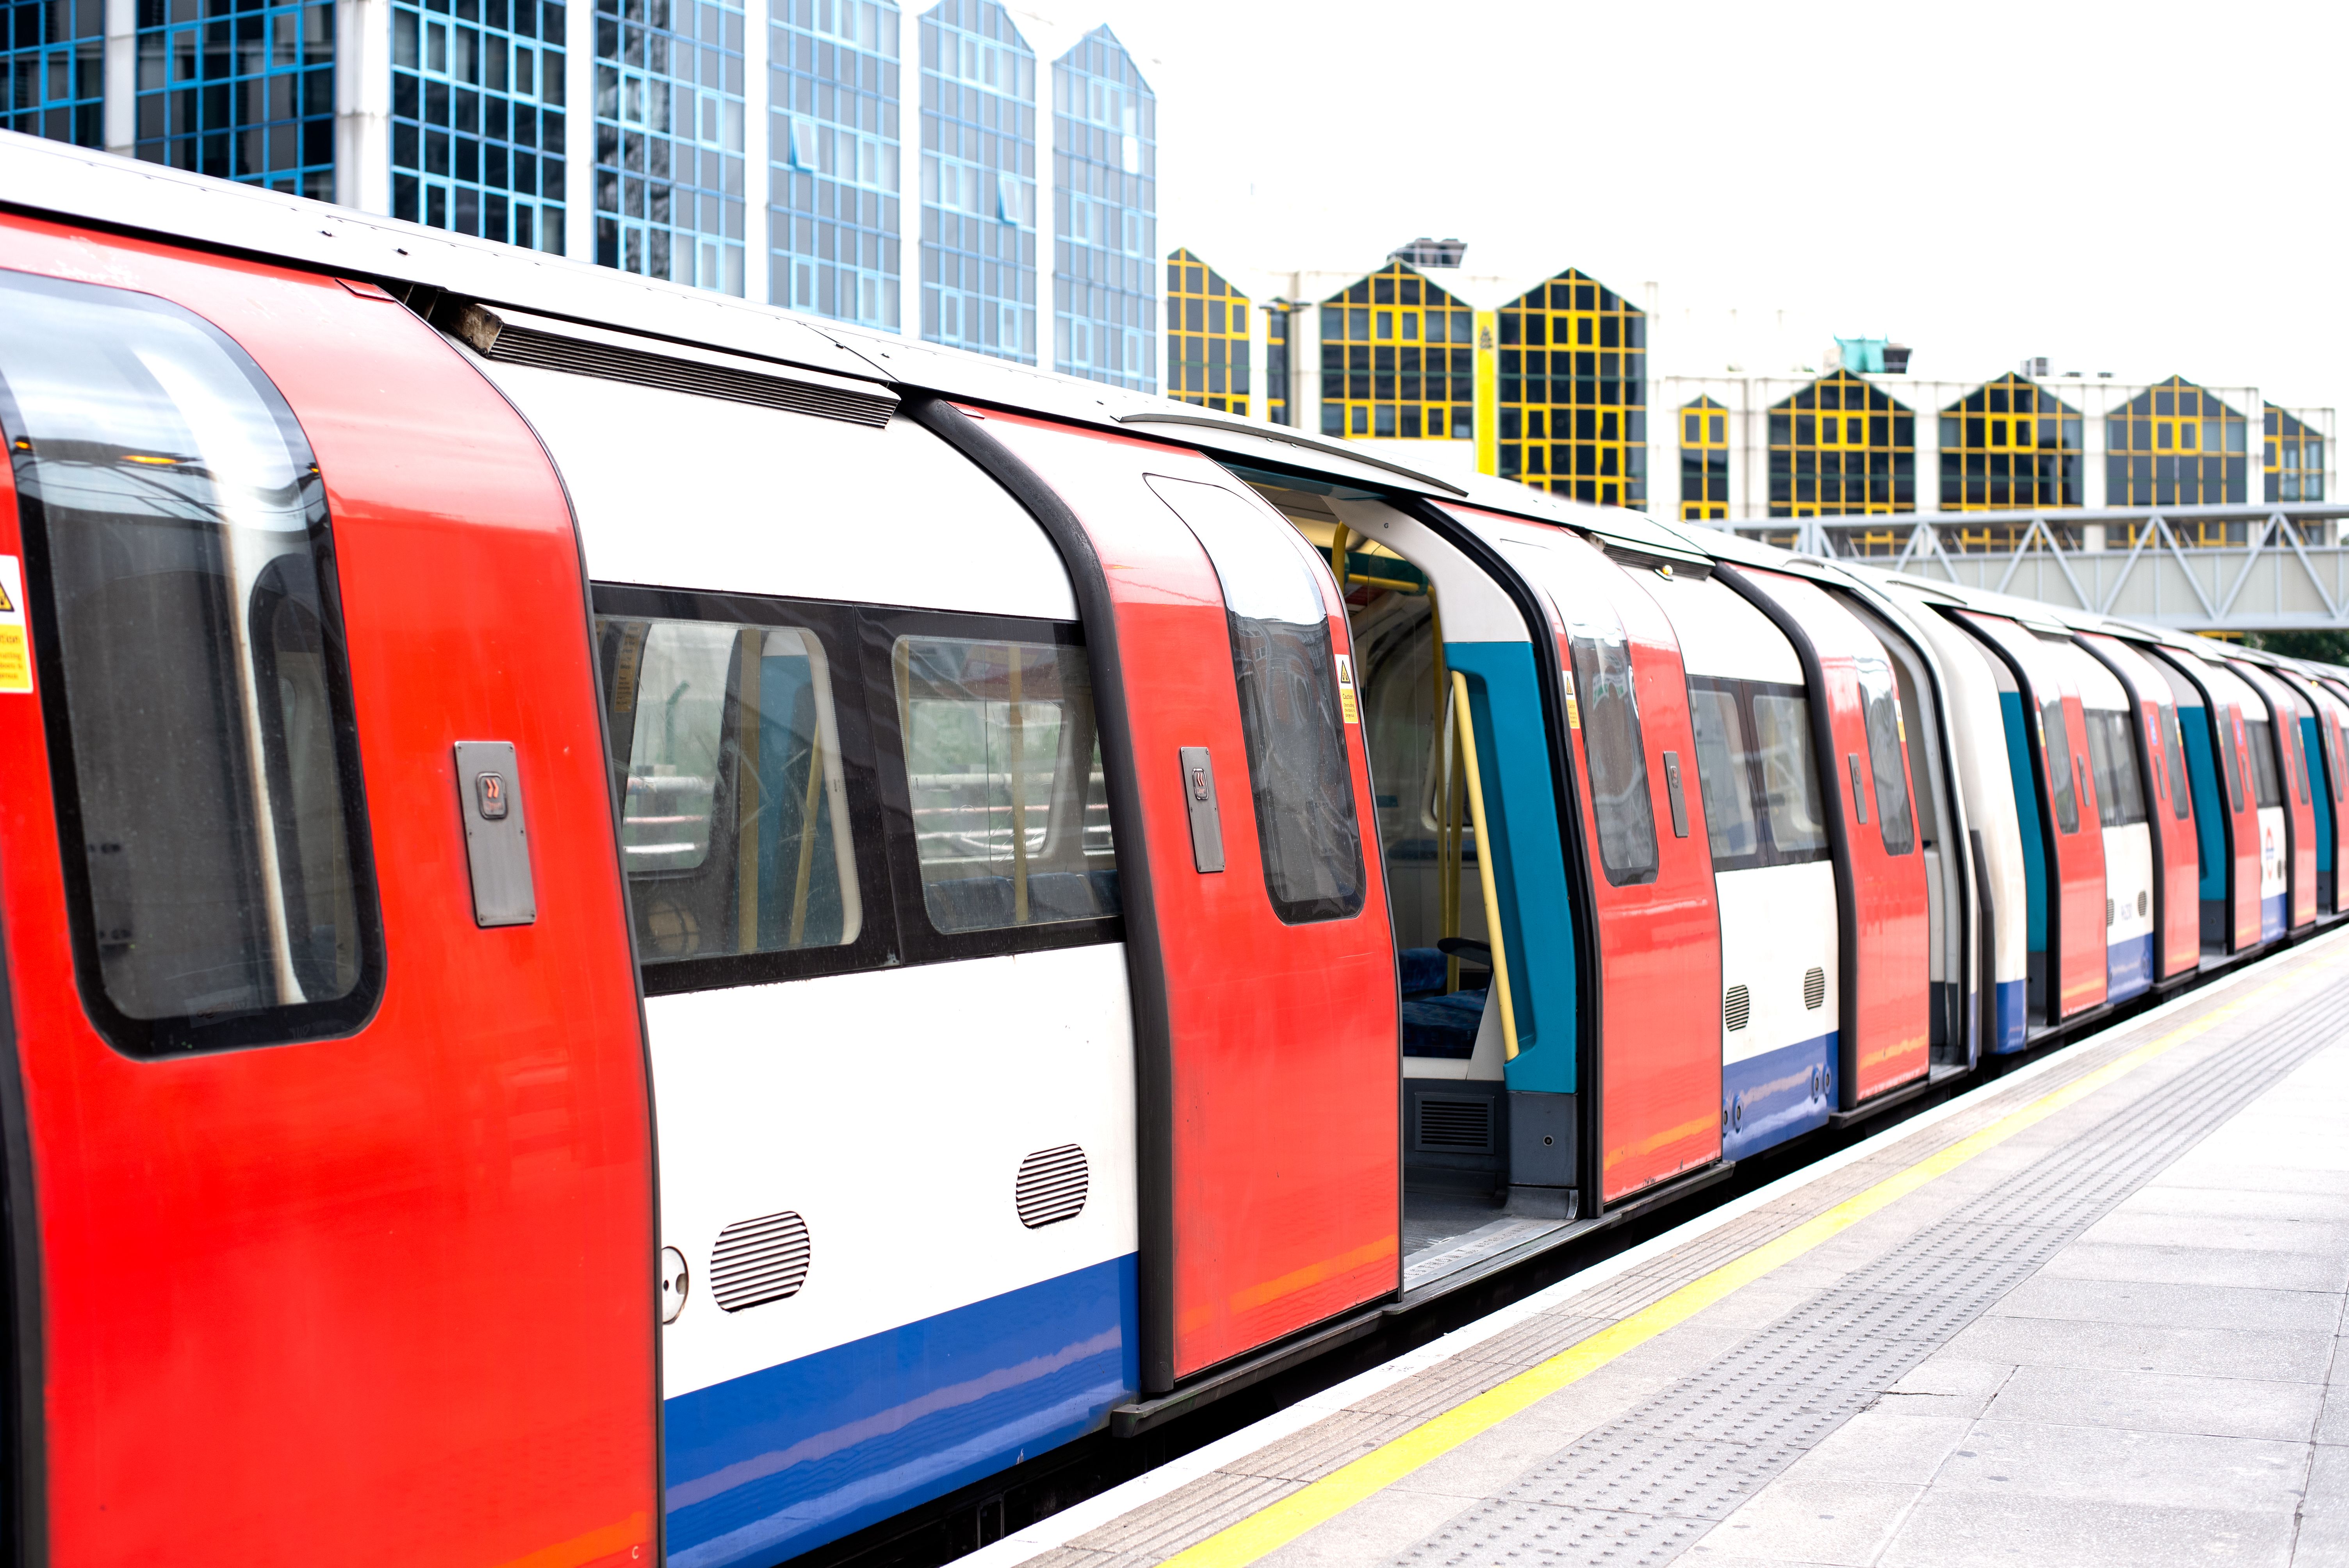 London Underground Tube Train Station 2021 08 26 20 17 08 Utc